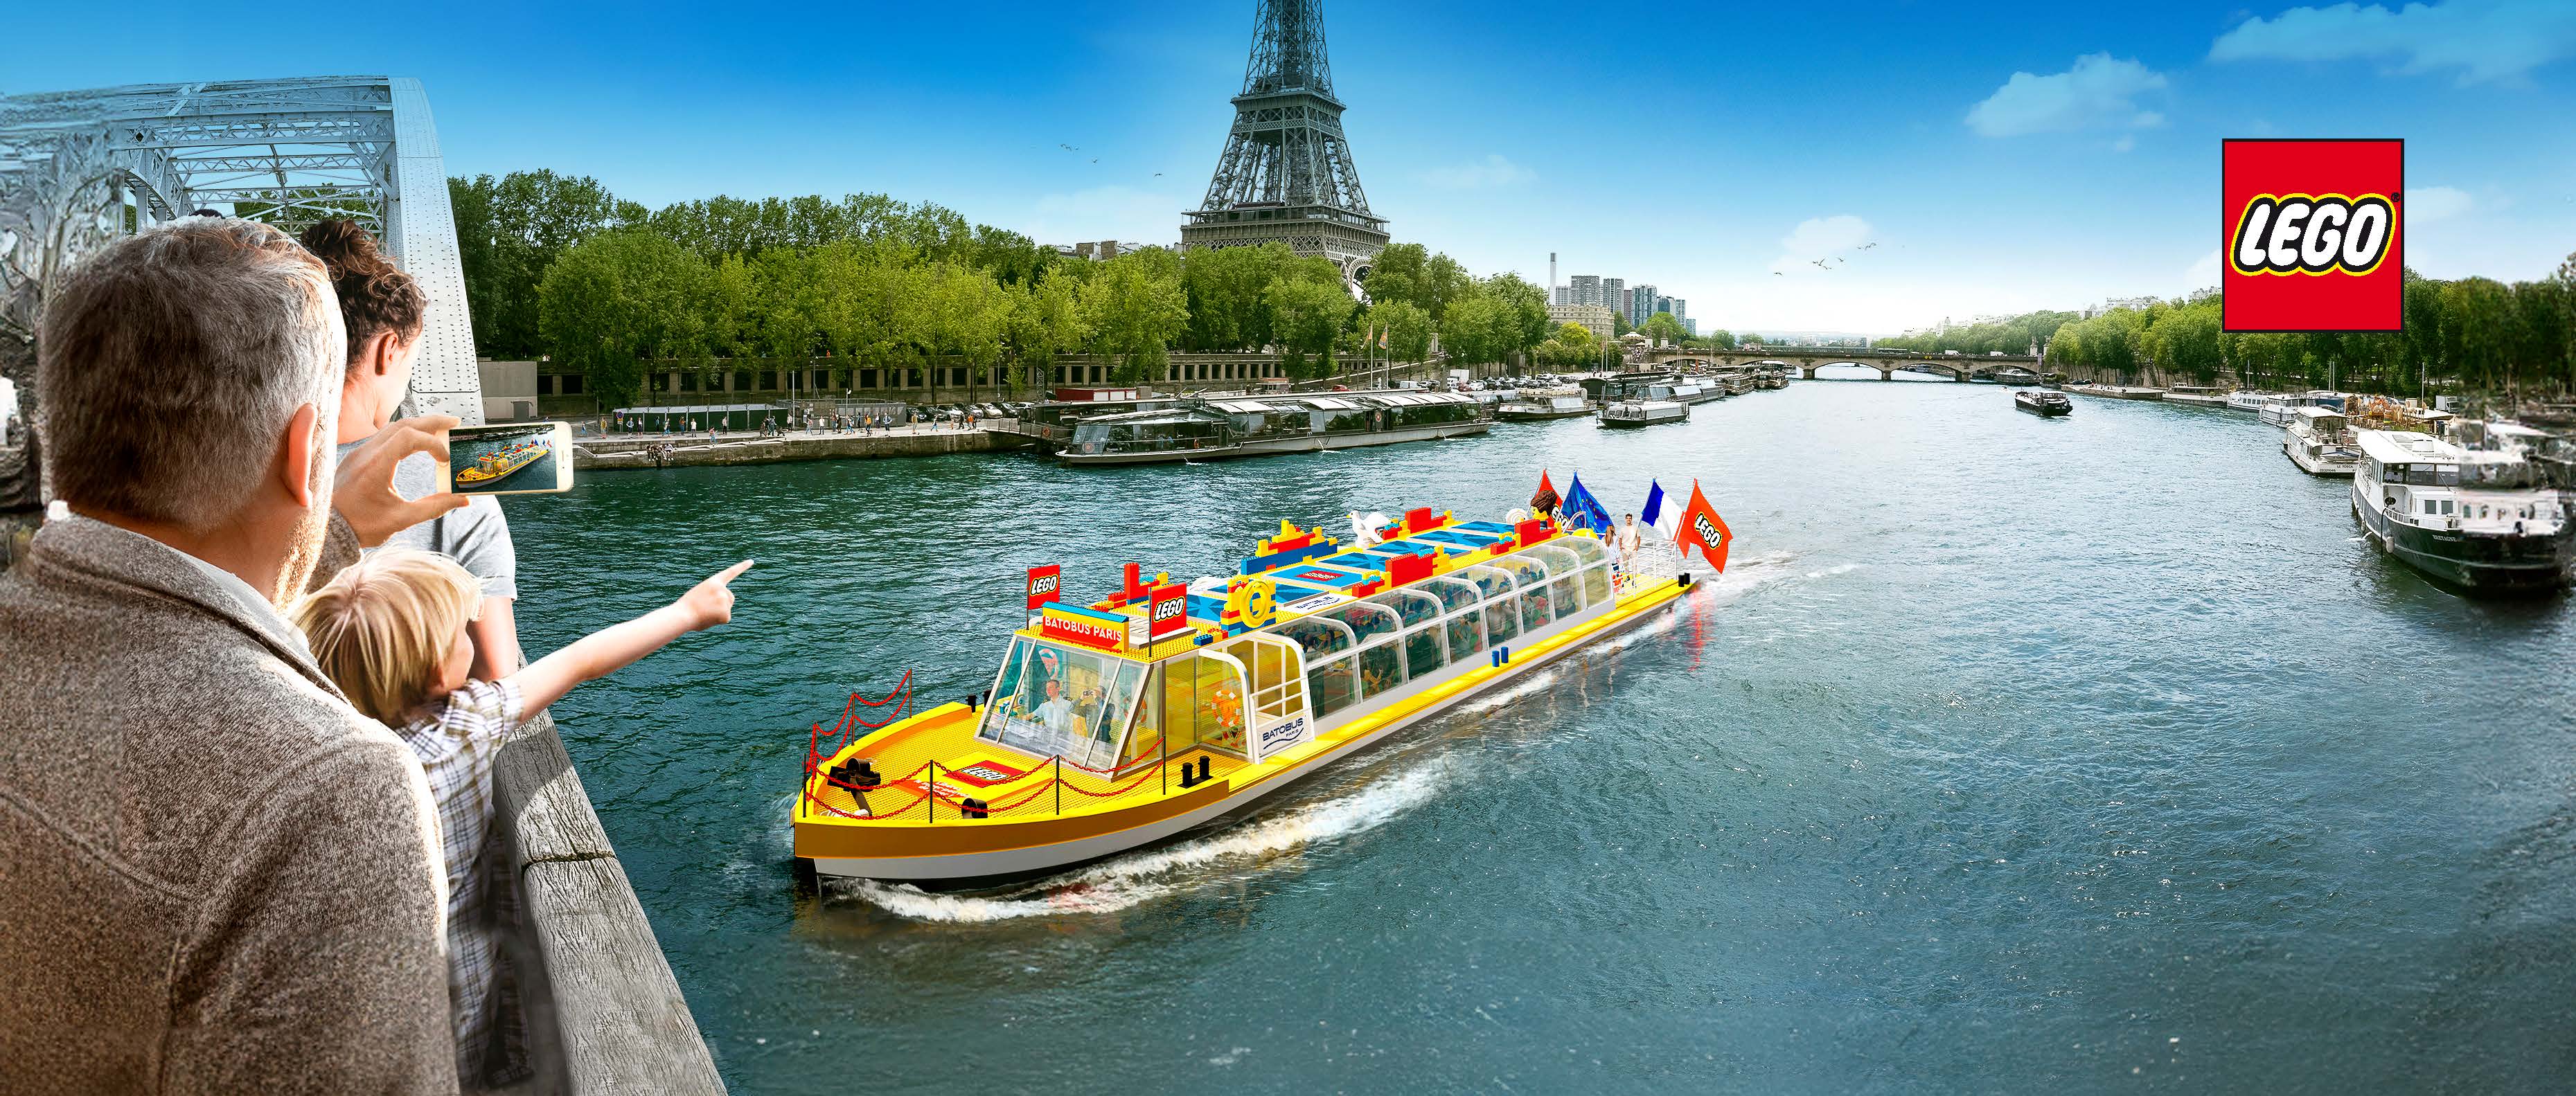 LEGO Boat I Batobus